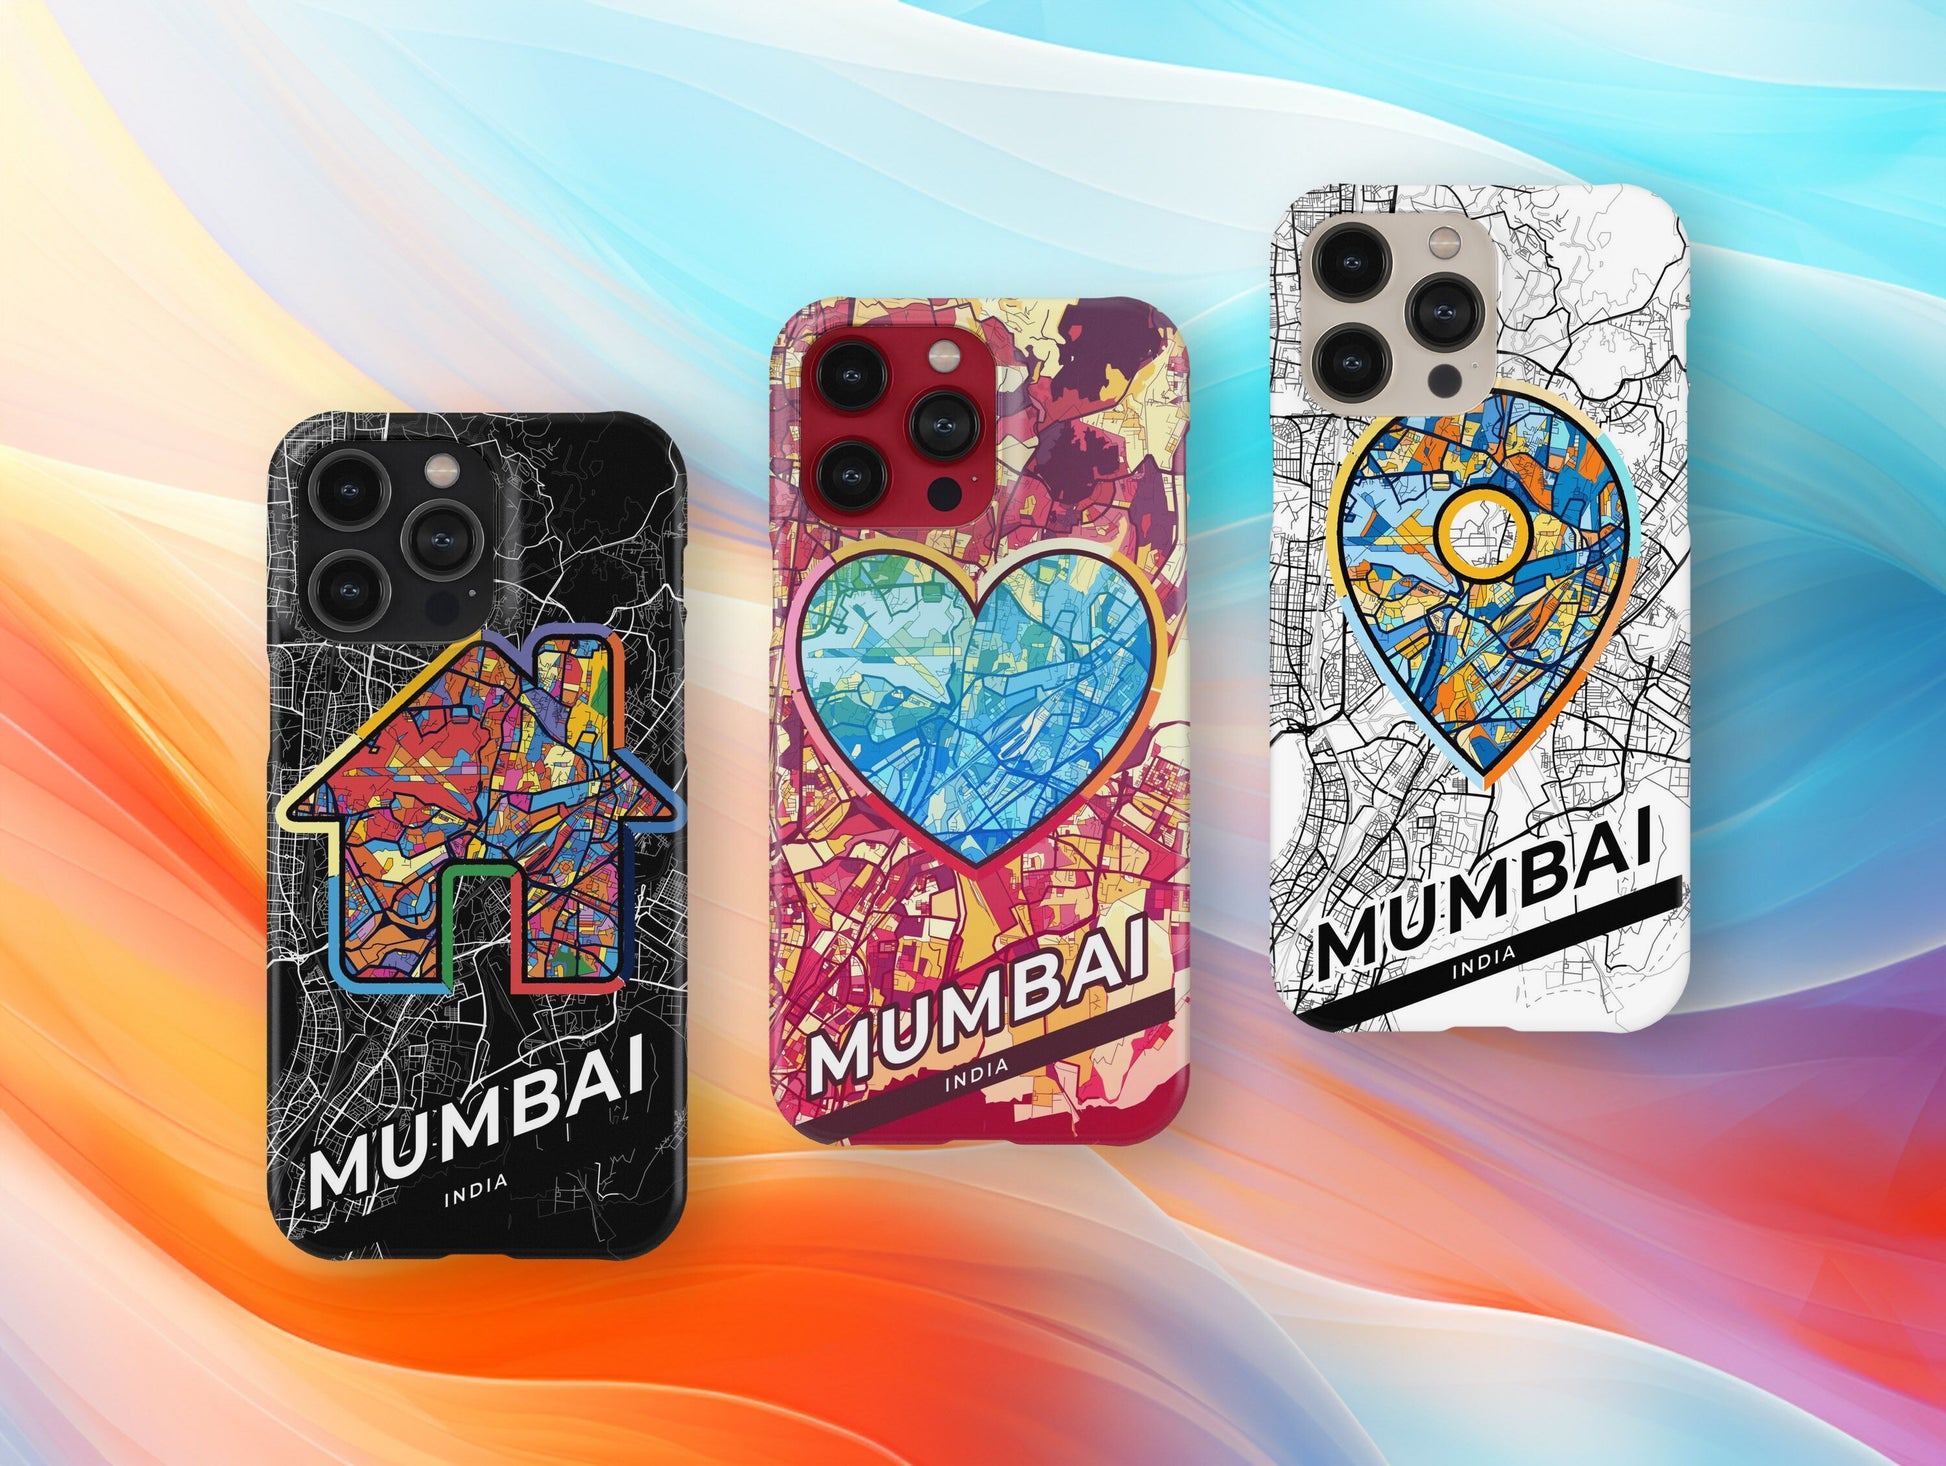 Mumbai India slim phone case with colorful icon